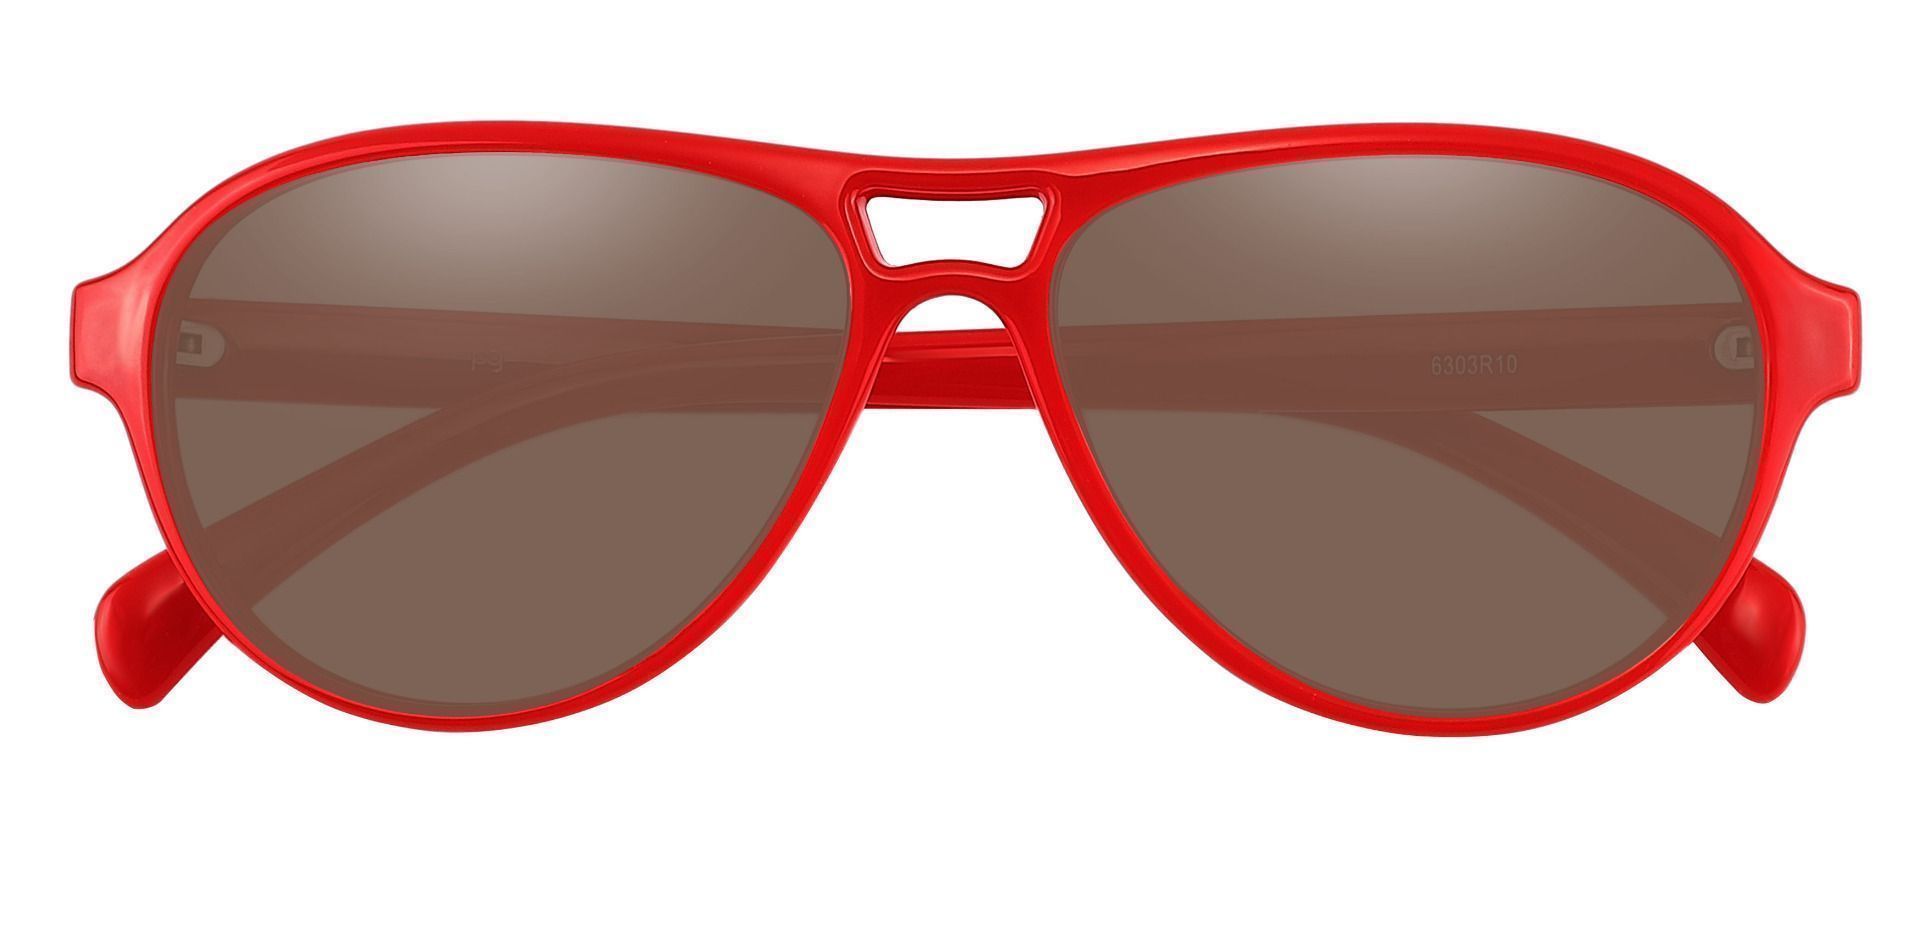 Sosa Aviator Reading Sunglasses - Red Frame With Brown Lenses